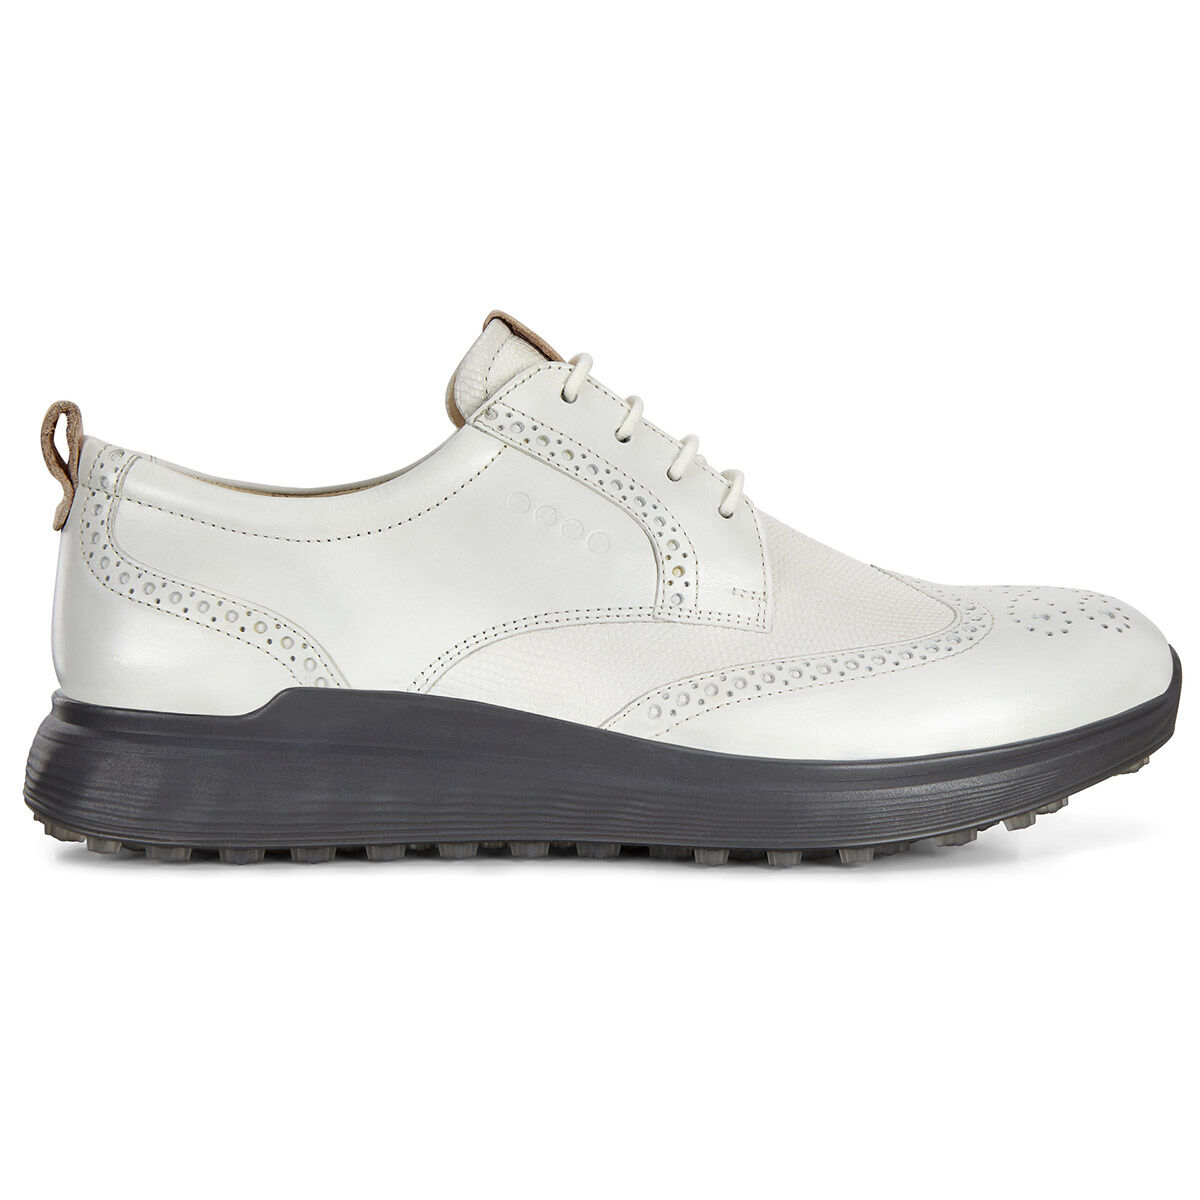 ECCO Golf S-Classic Shoes | Online Golf